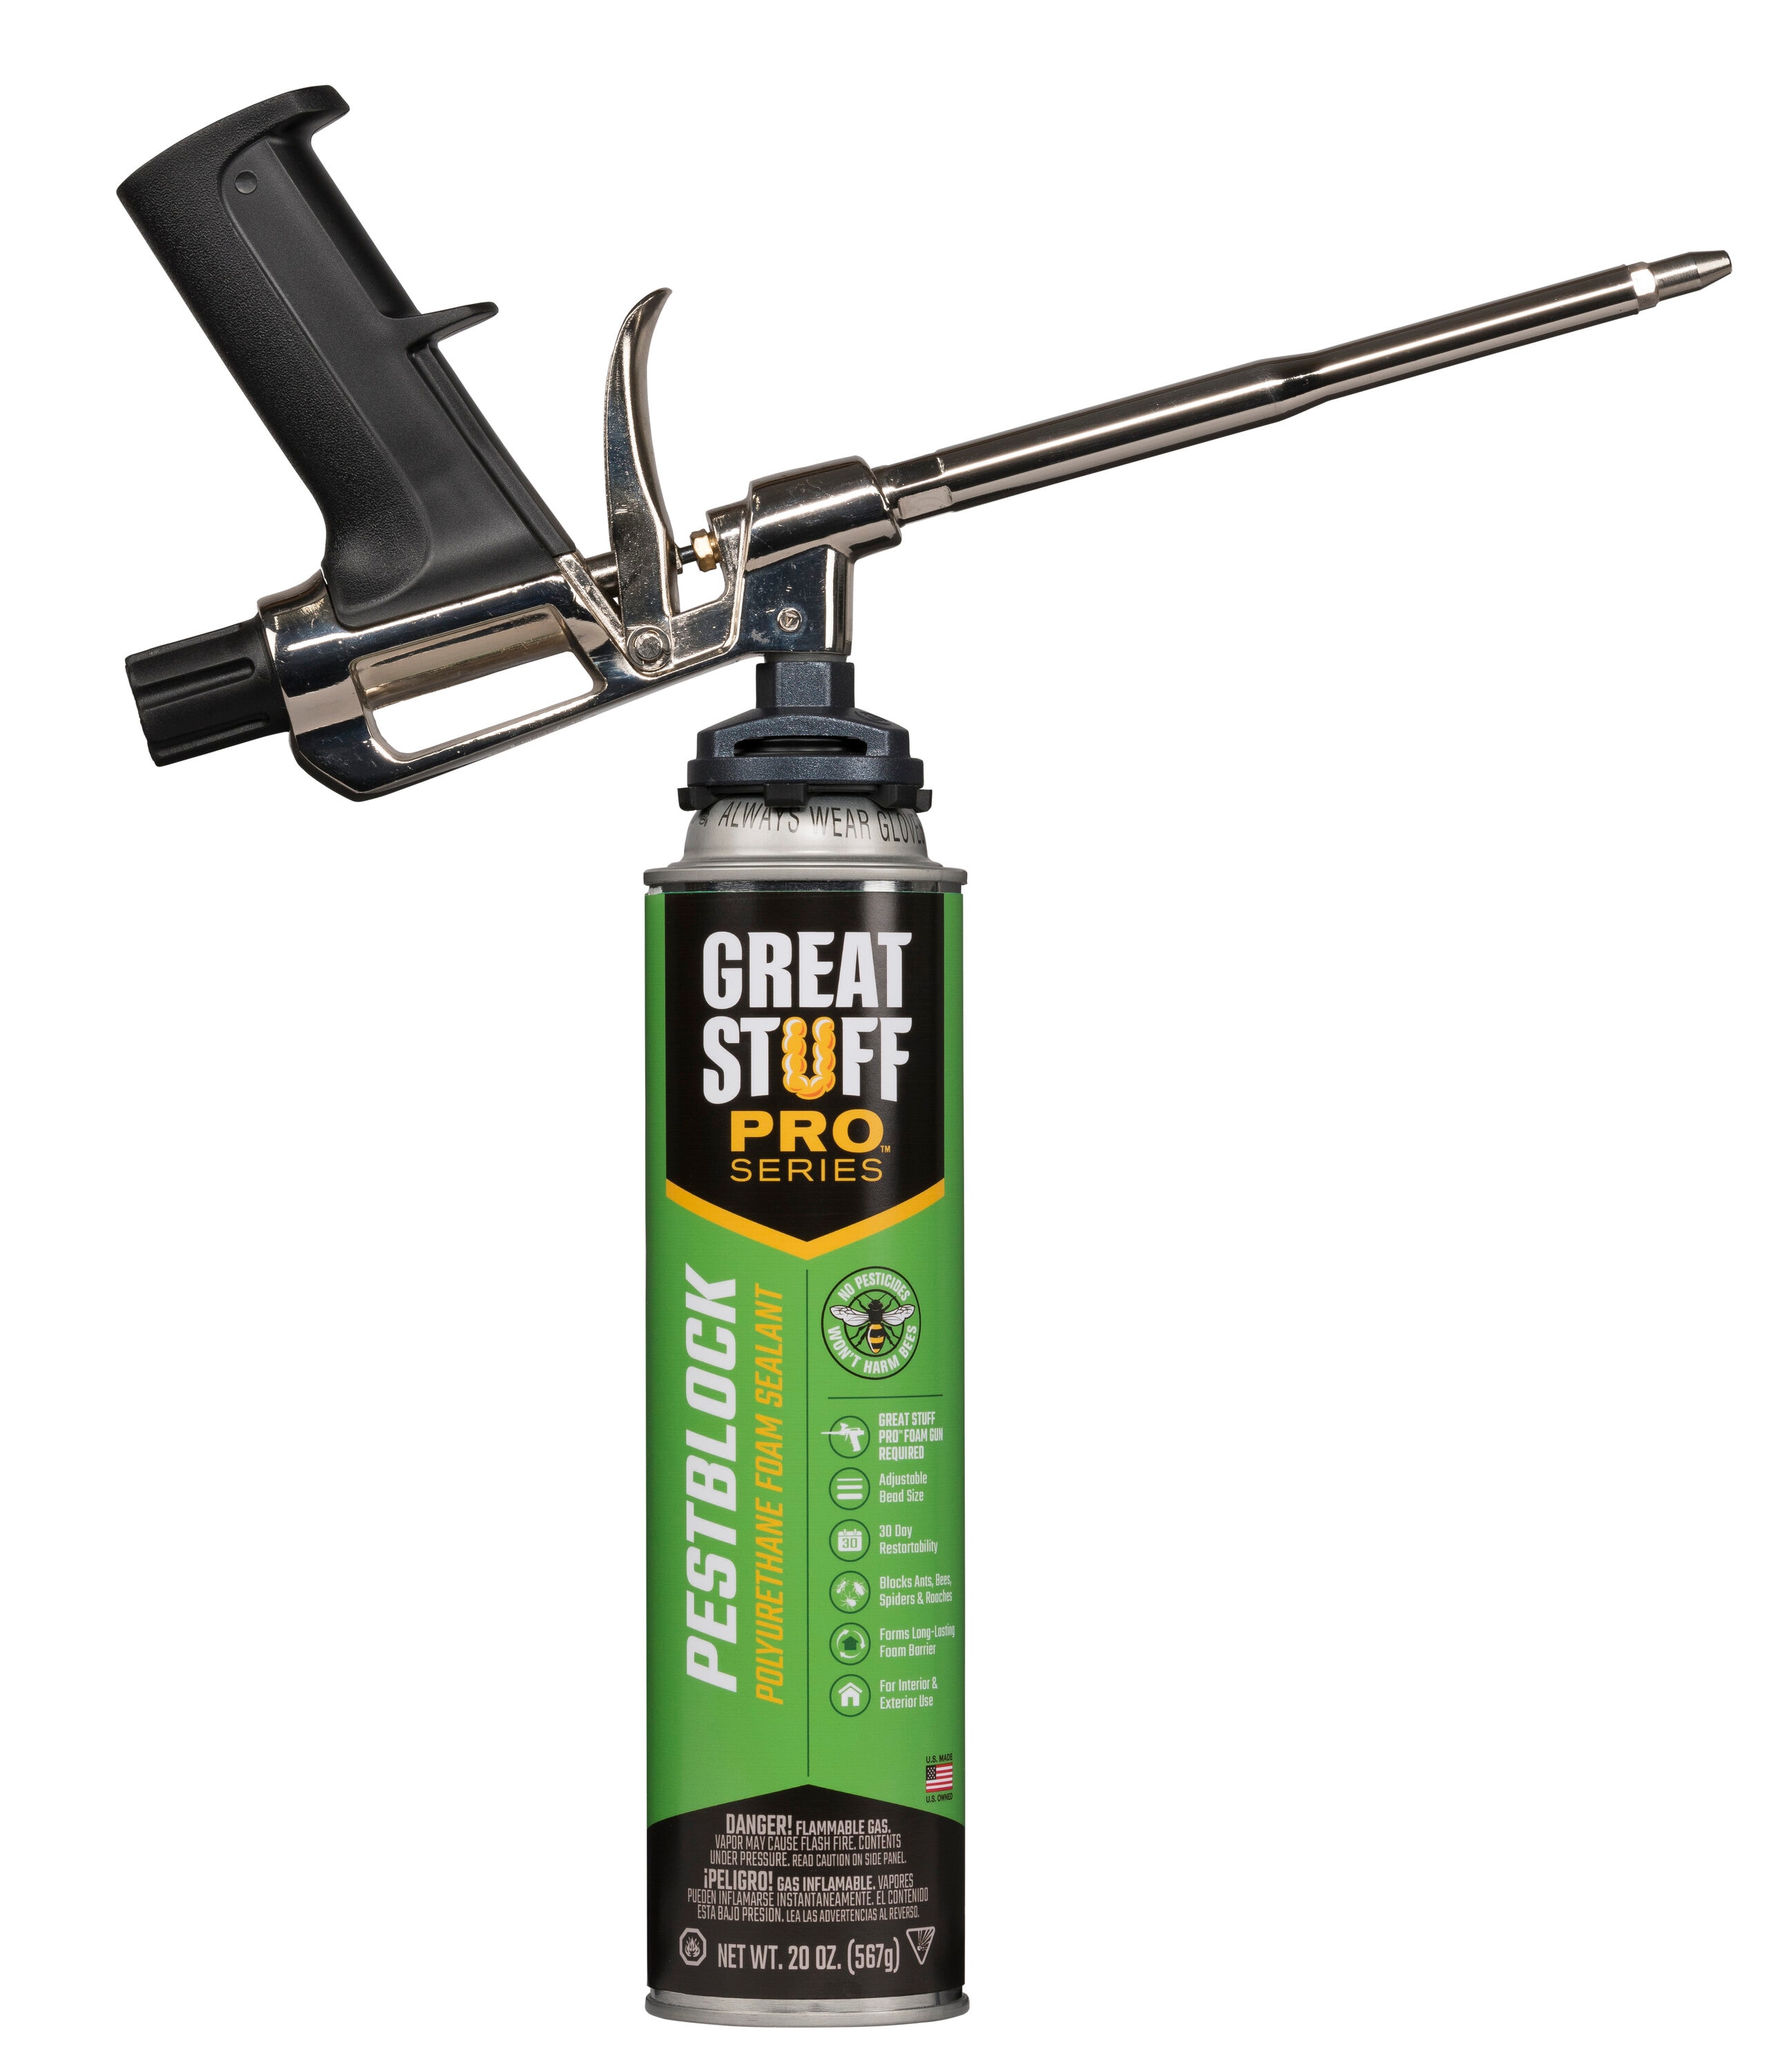 GREAT STUFF Gaps and Cracks 48 oz Spray Gun Indoor/Outdoor Spray